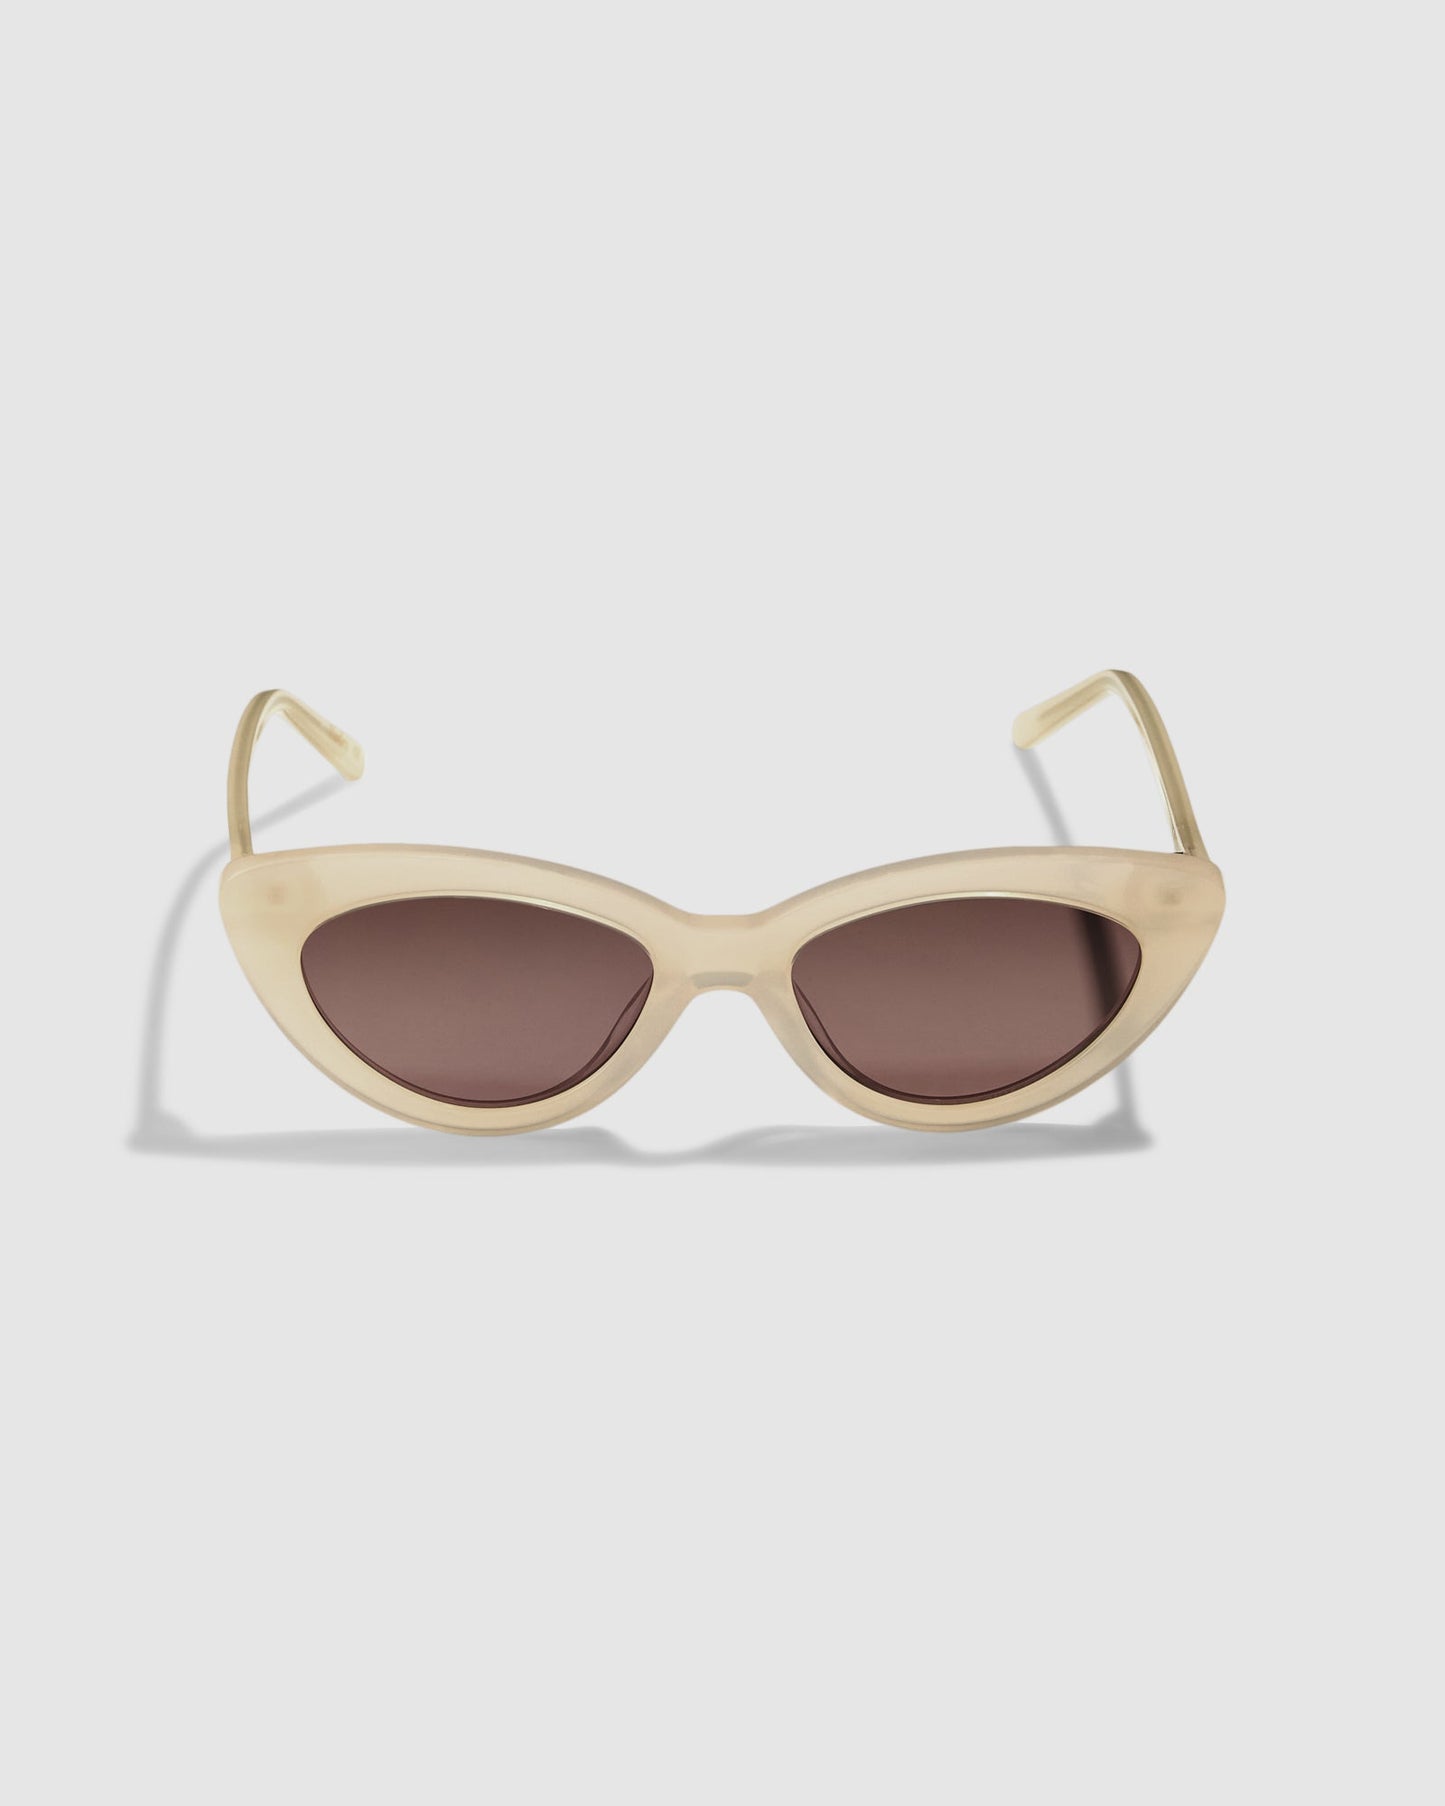 The Harley, Cream - Classic Cat Eye Sunnies, Women's Sunglasses & Eyewear by Luv Lou